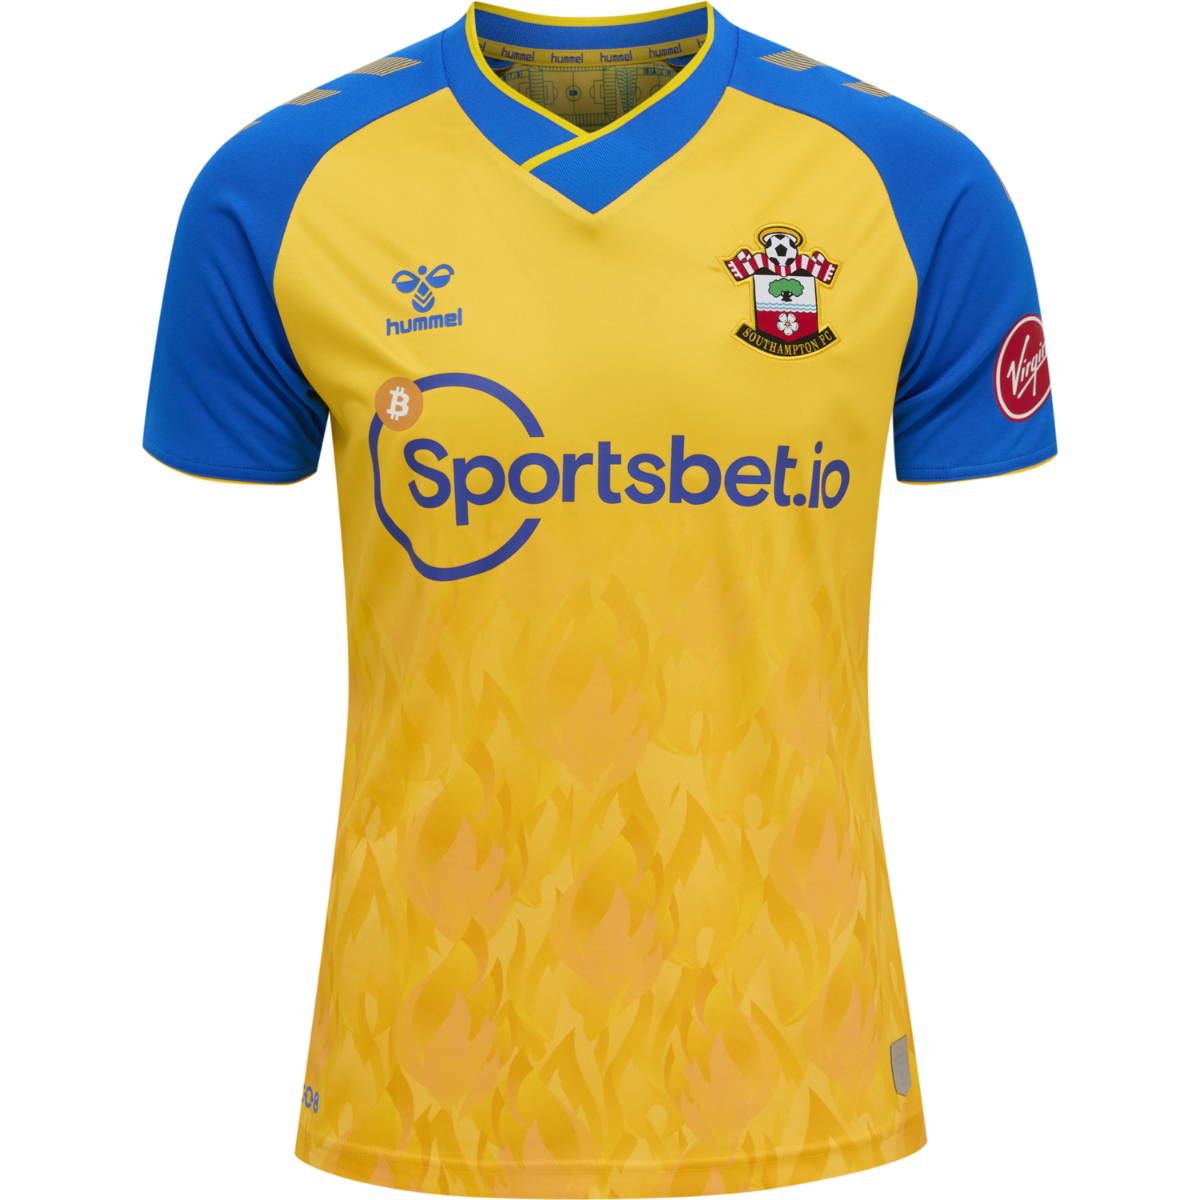 Hummel 2021-22 Southampton Away Jersey - Yellow-Royal (Front)